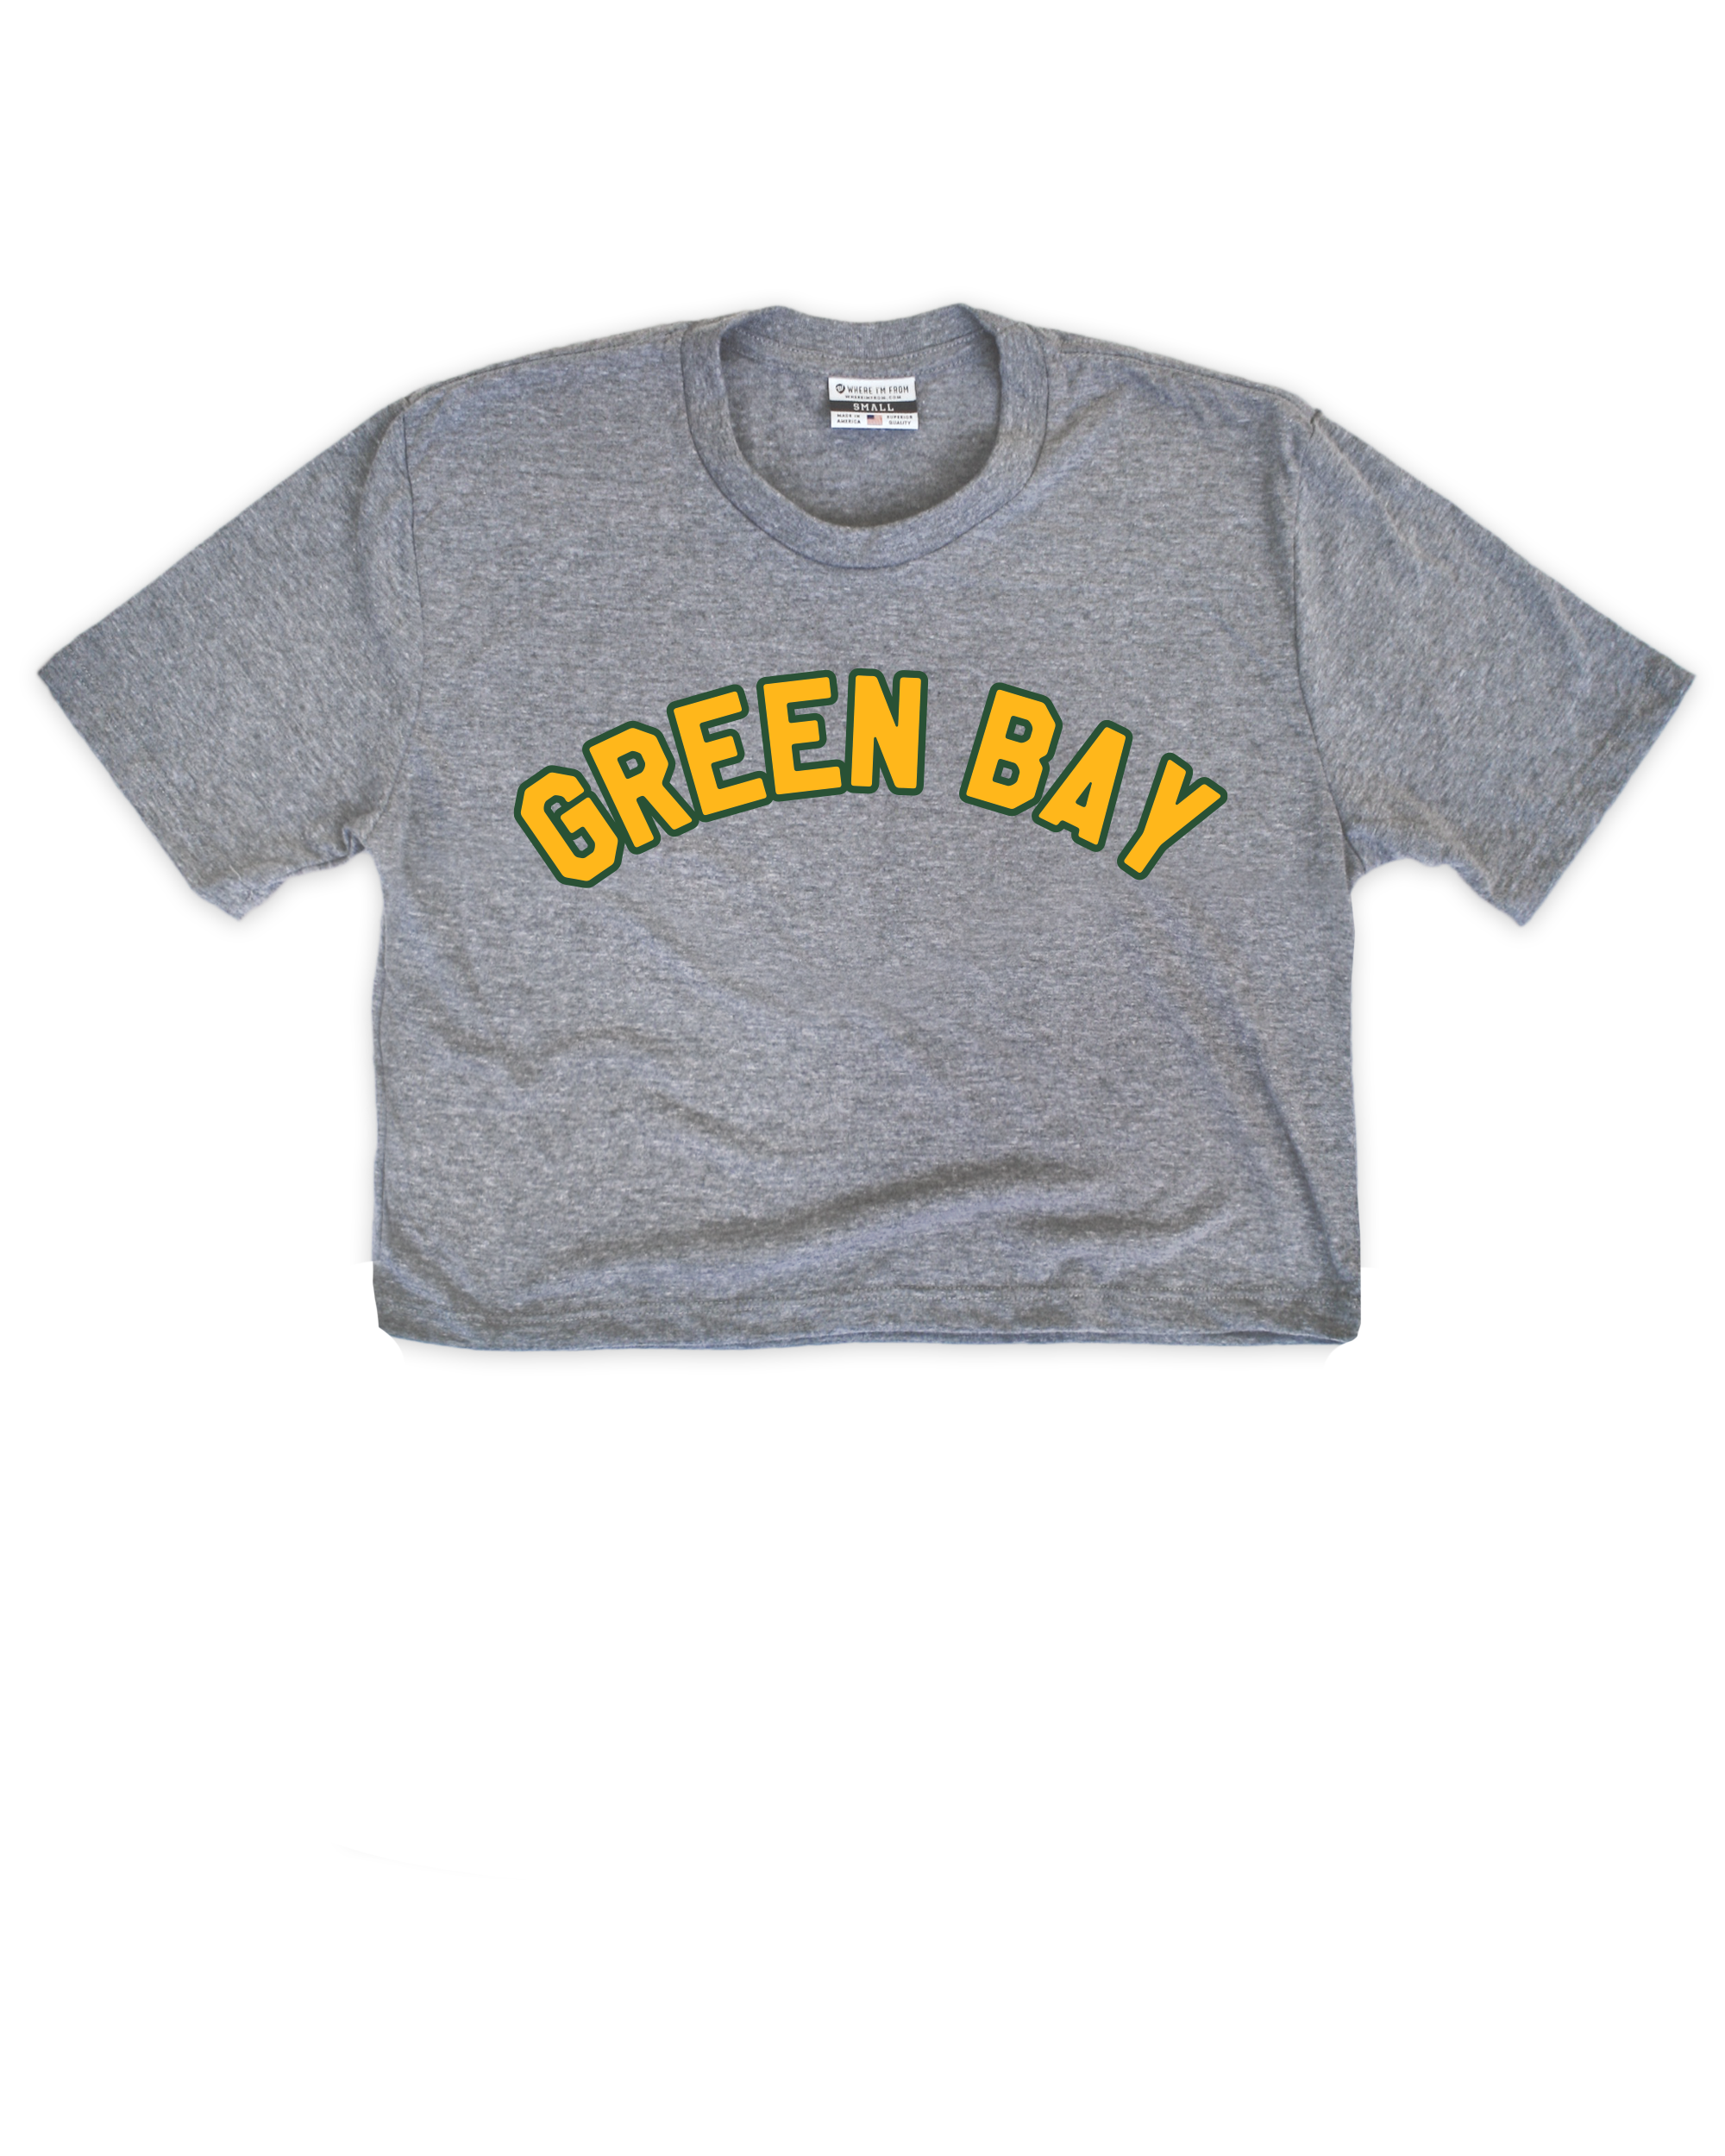 Green Bay Jersey Gray Crop Top